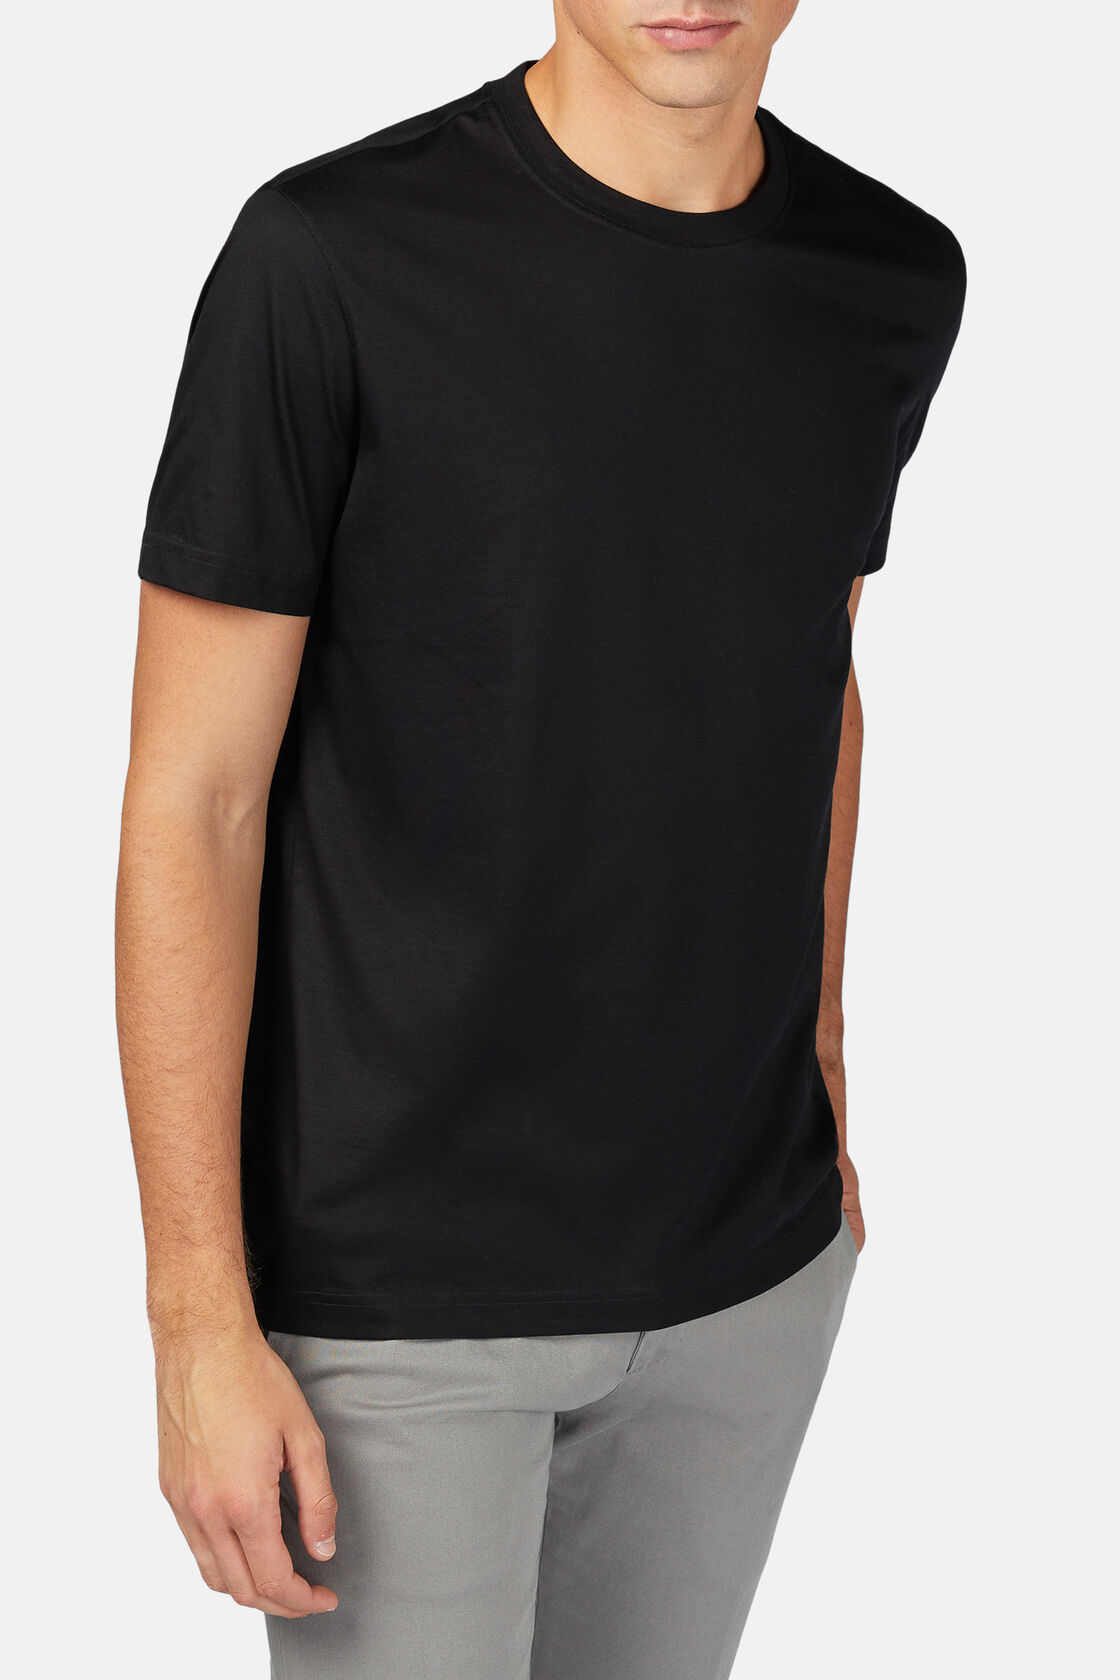 Pima cotton jersey t-shirt, Black, hi-res